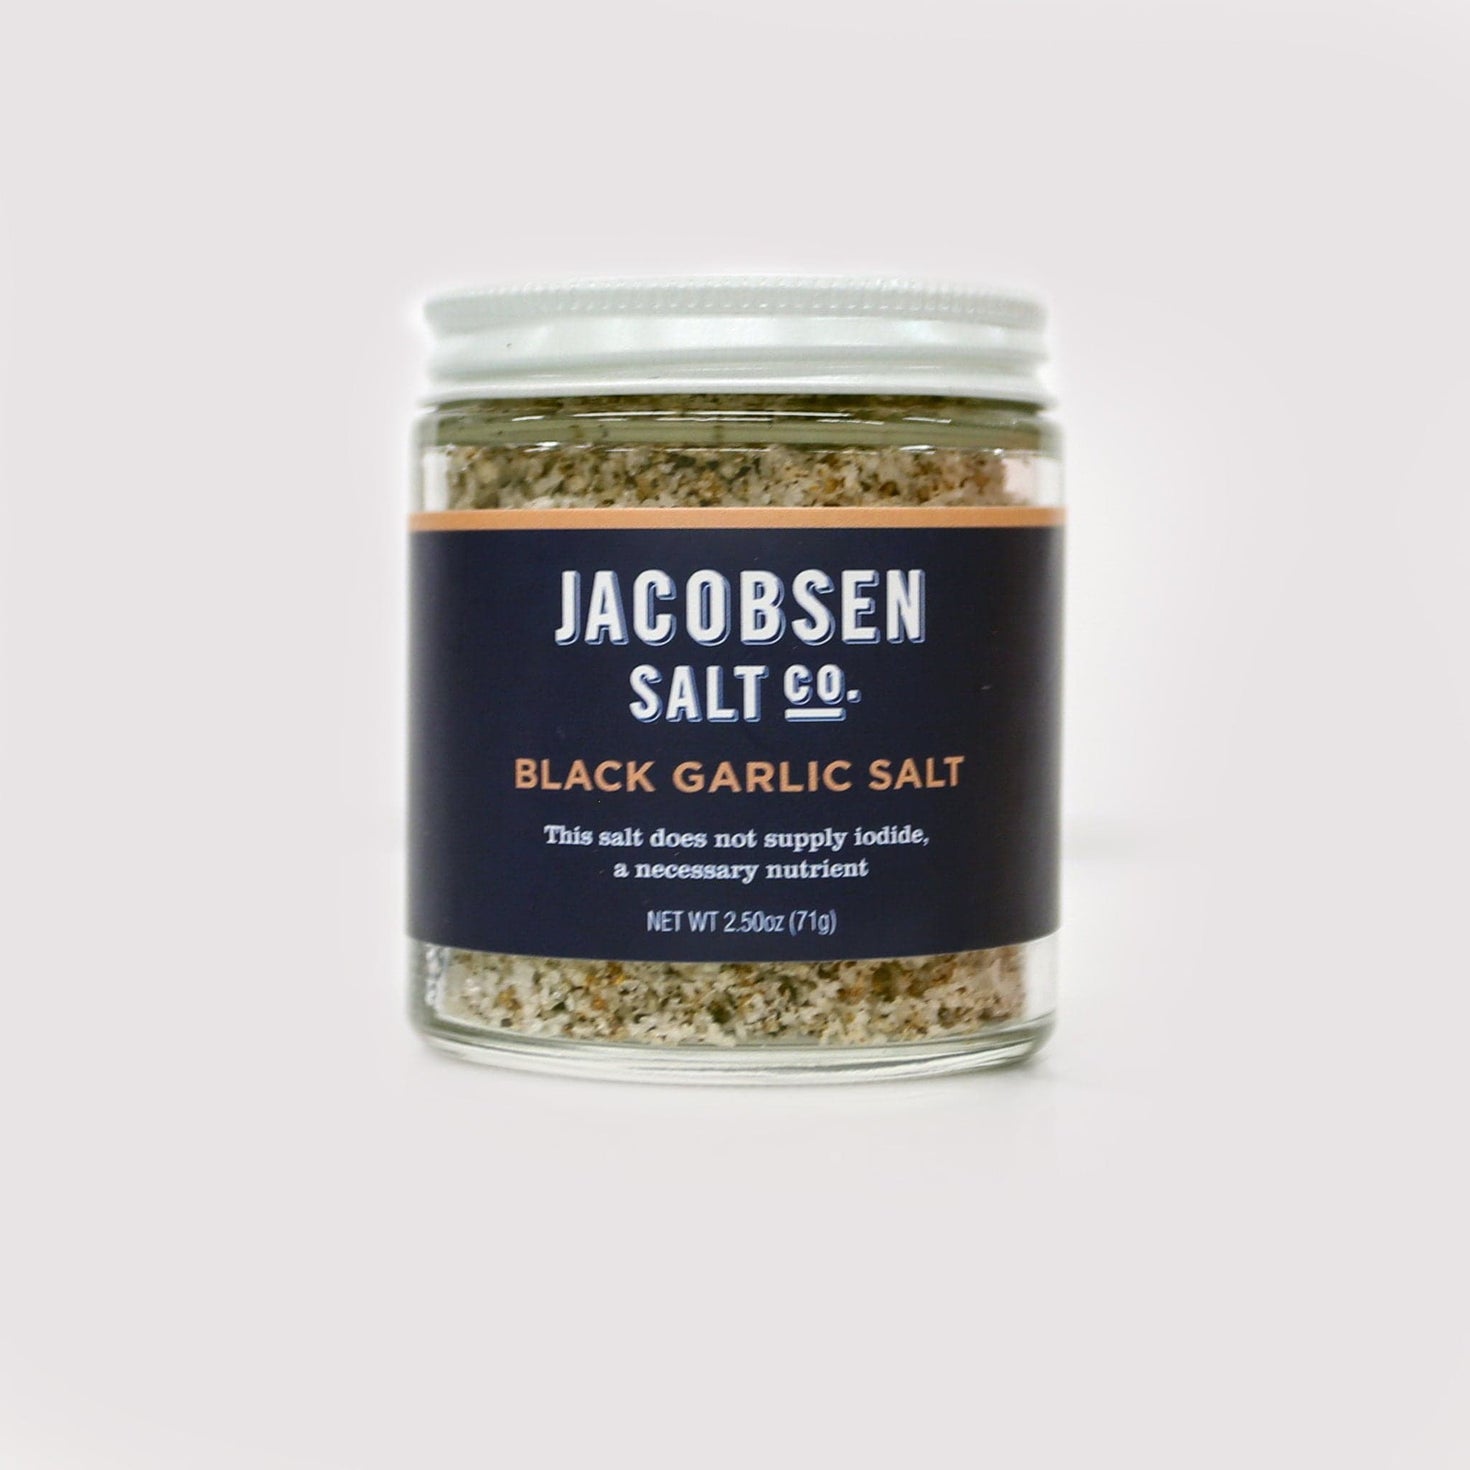 Jacobsen Salt Co - Black Garlic Salt 2.25oz